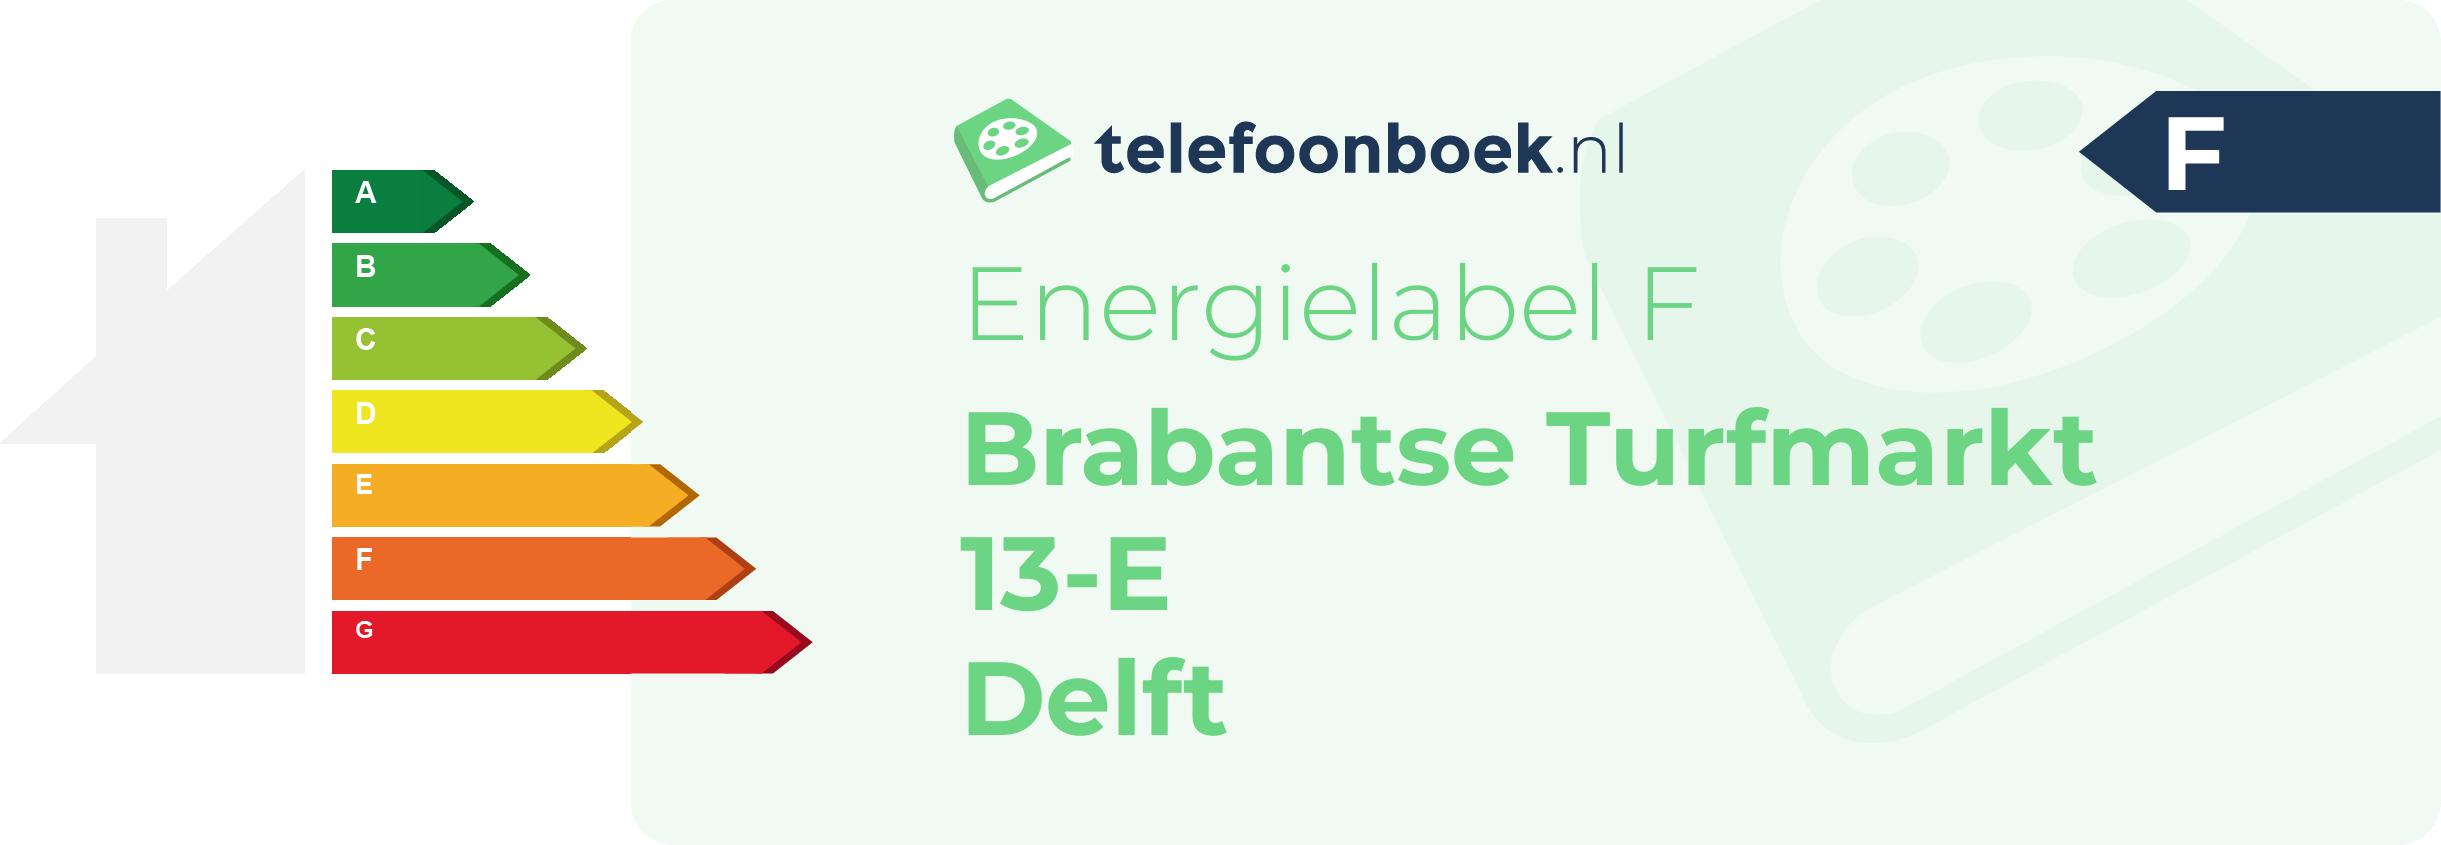 Energielabel Brabantse Turfmarkt 13-E Delft